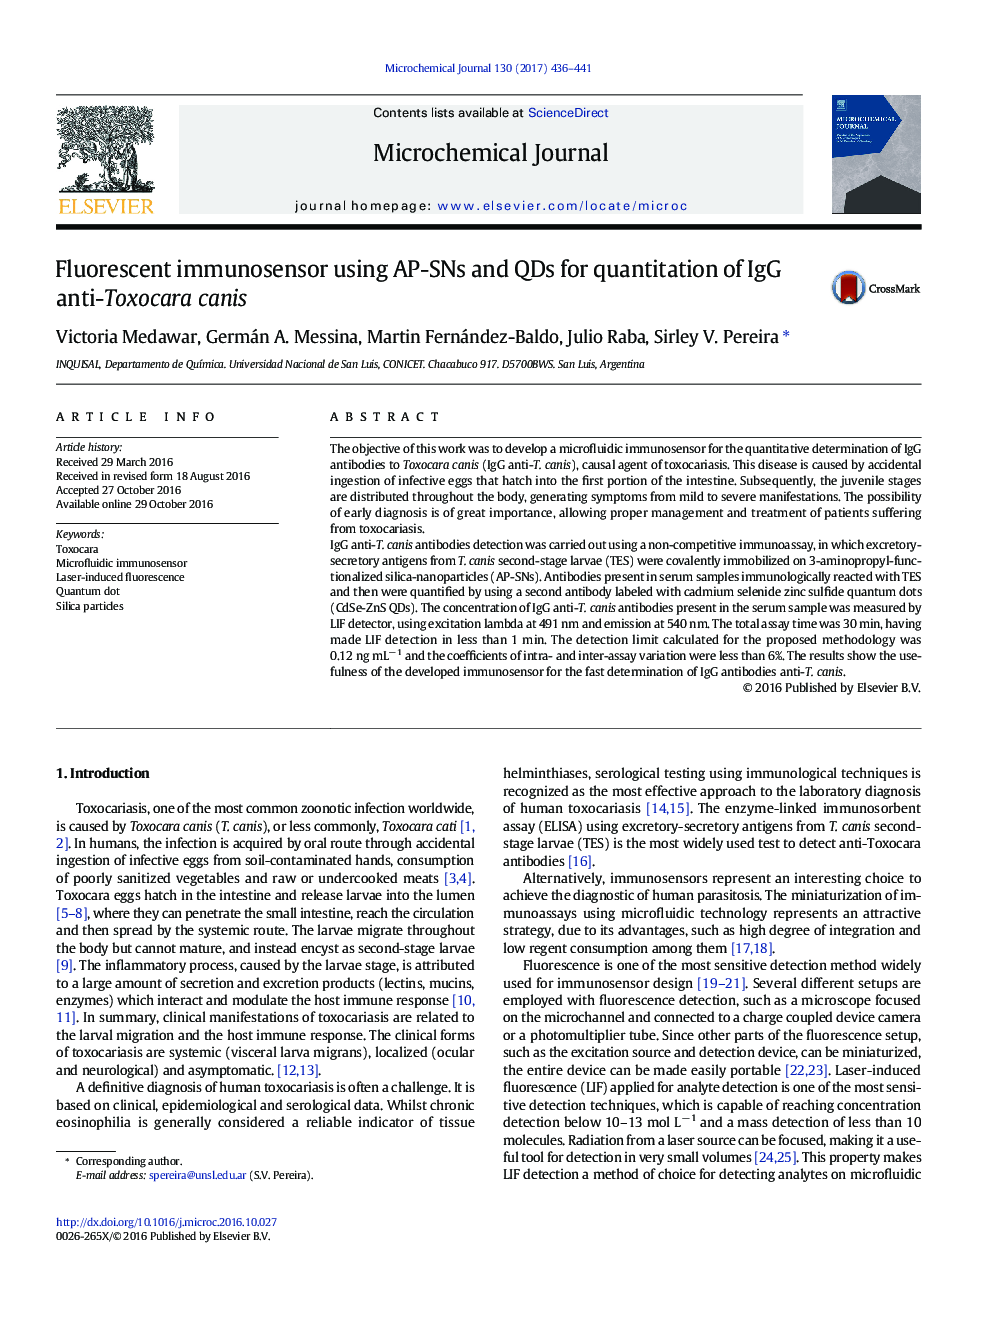 Fluorescent immunosensor using AP-SNs and QDs for quantitation of IgG anti-Toxocara canis